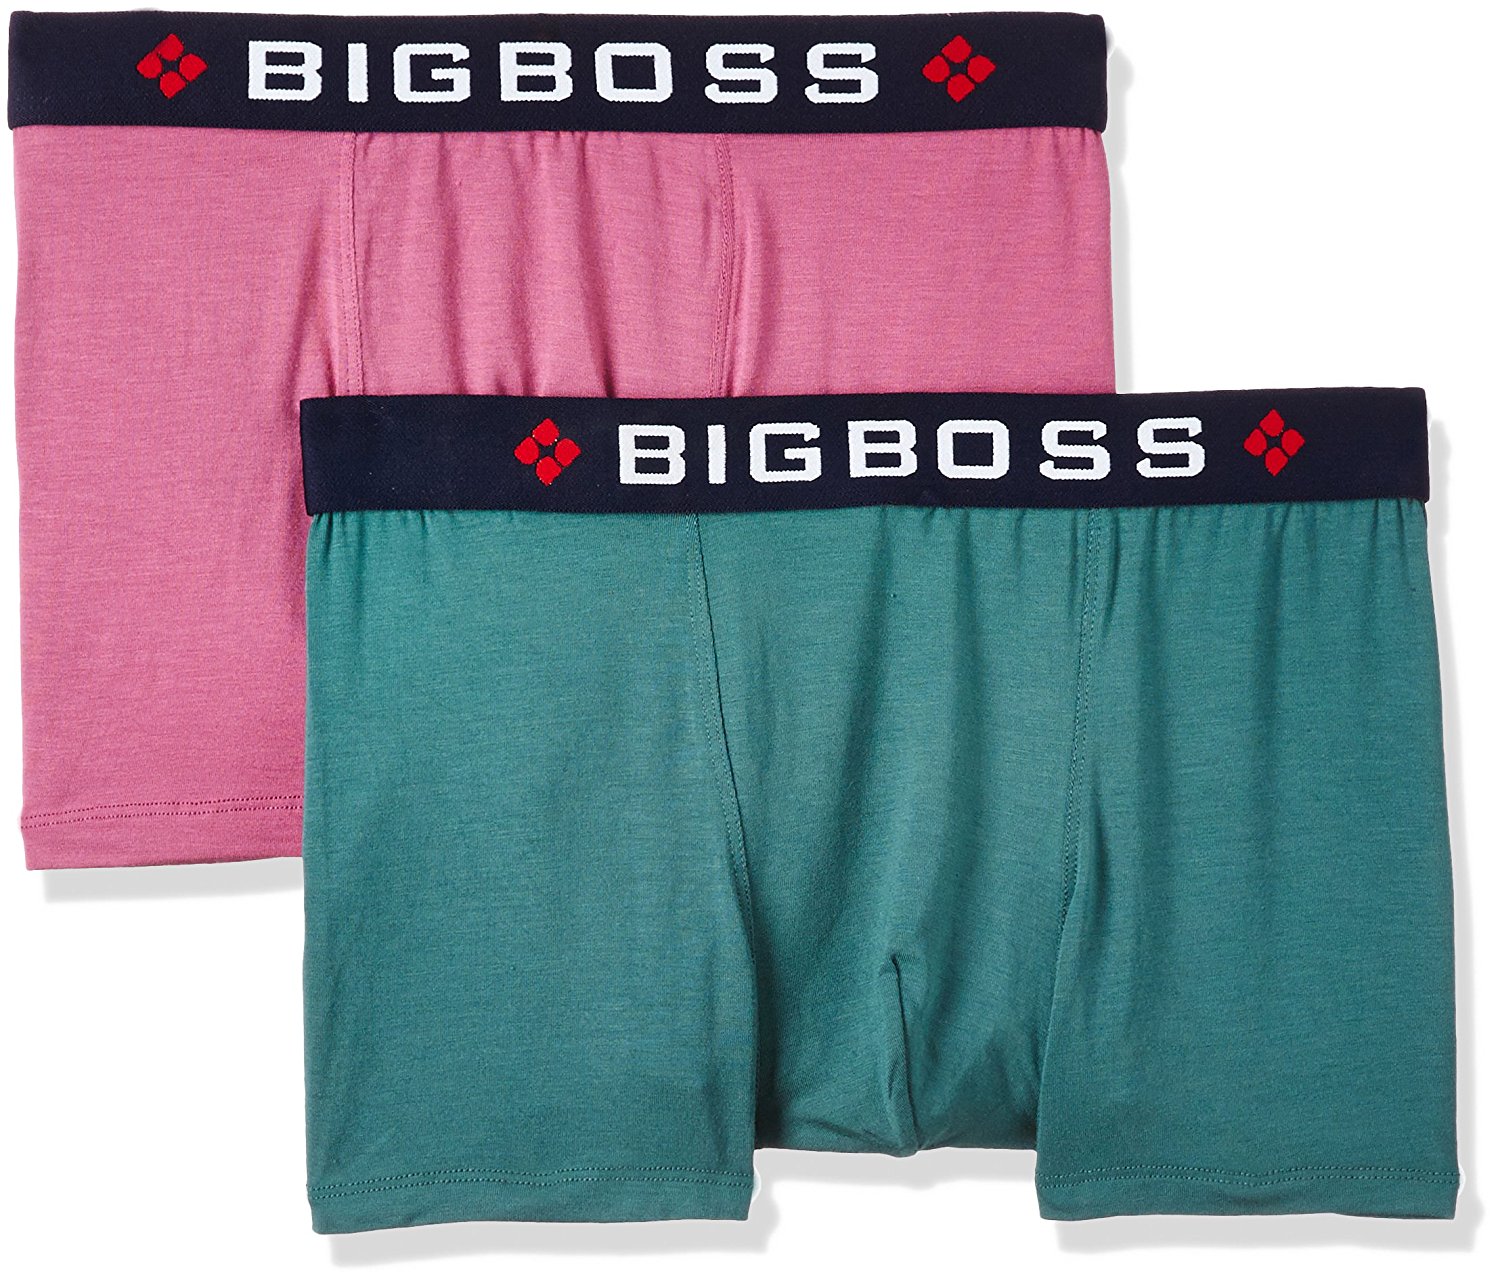 big boss underwear